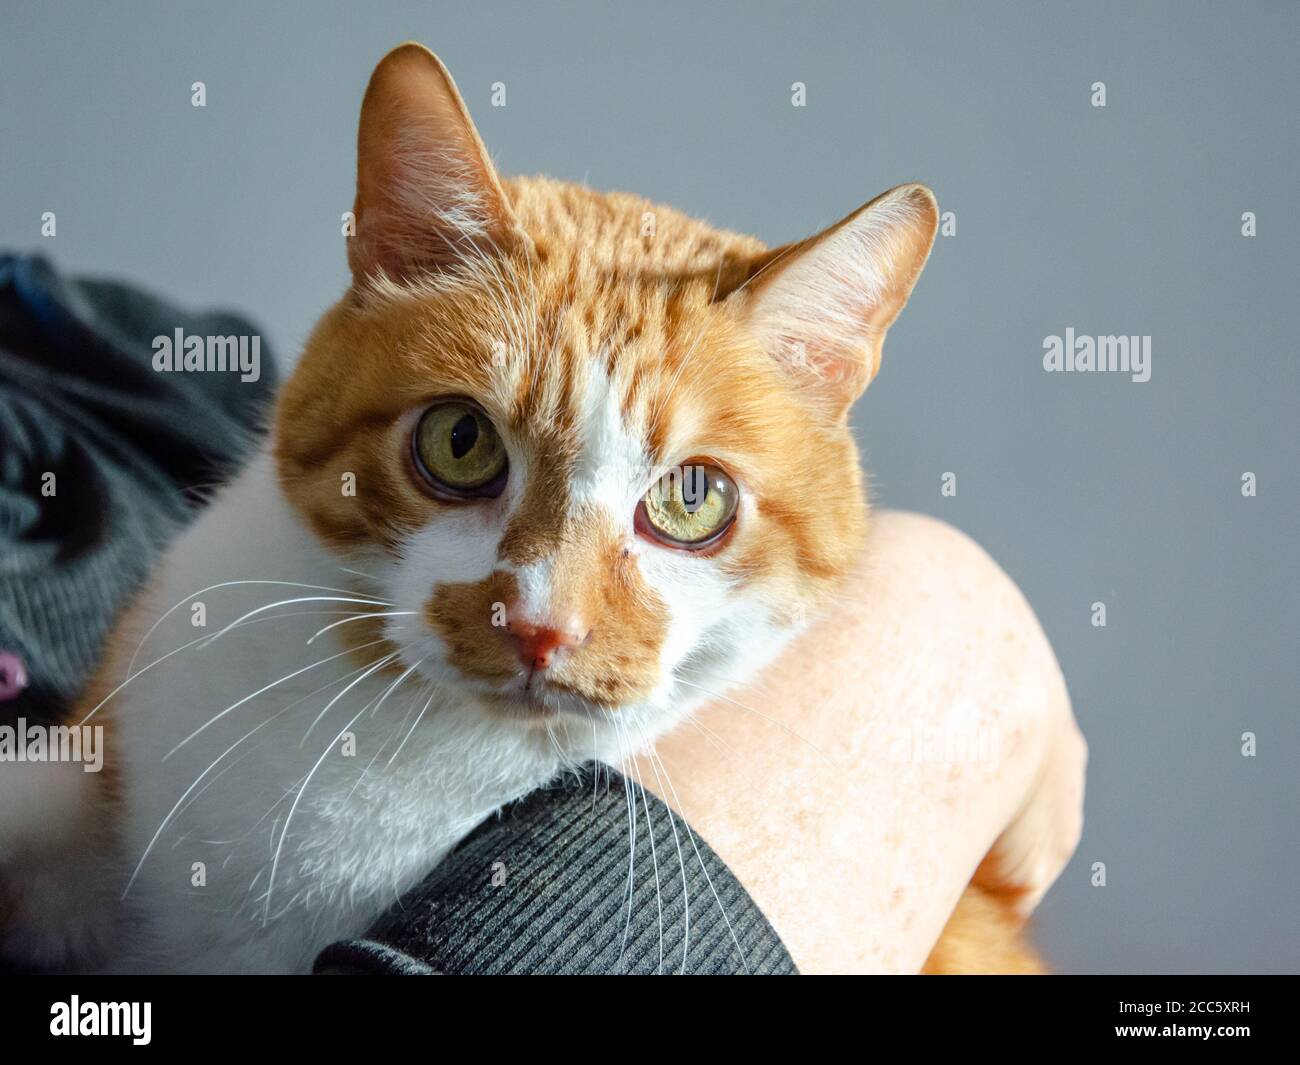 retrato de un rostro de jengibre/gato amarillo con ojos grandes Foto de stock